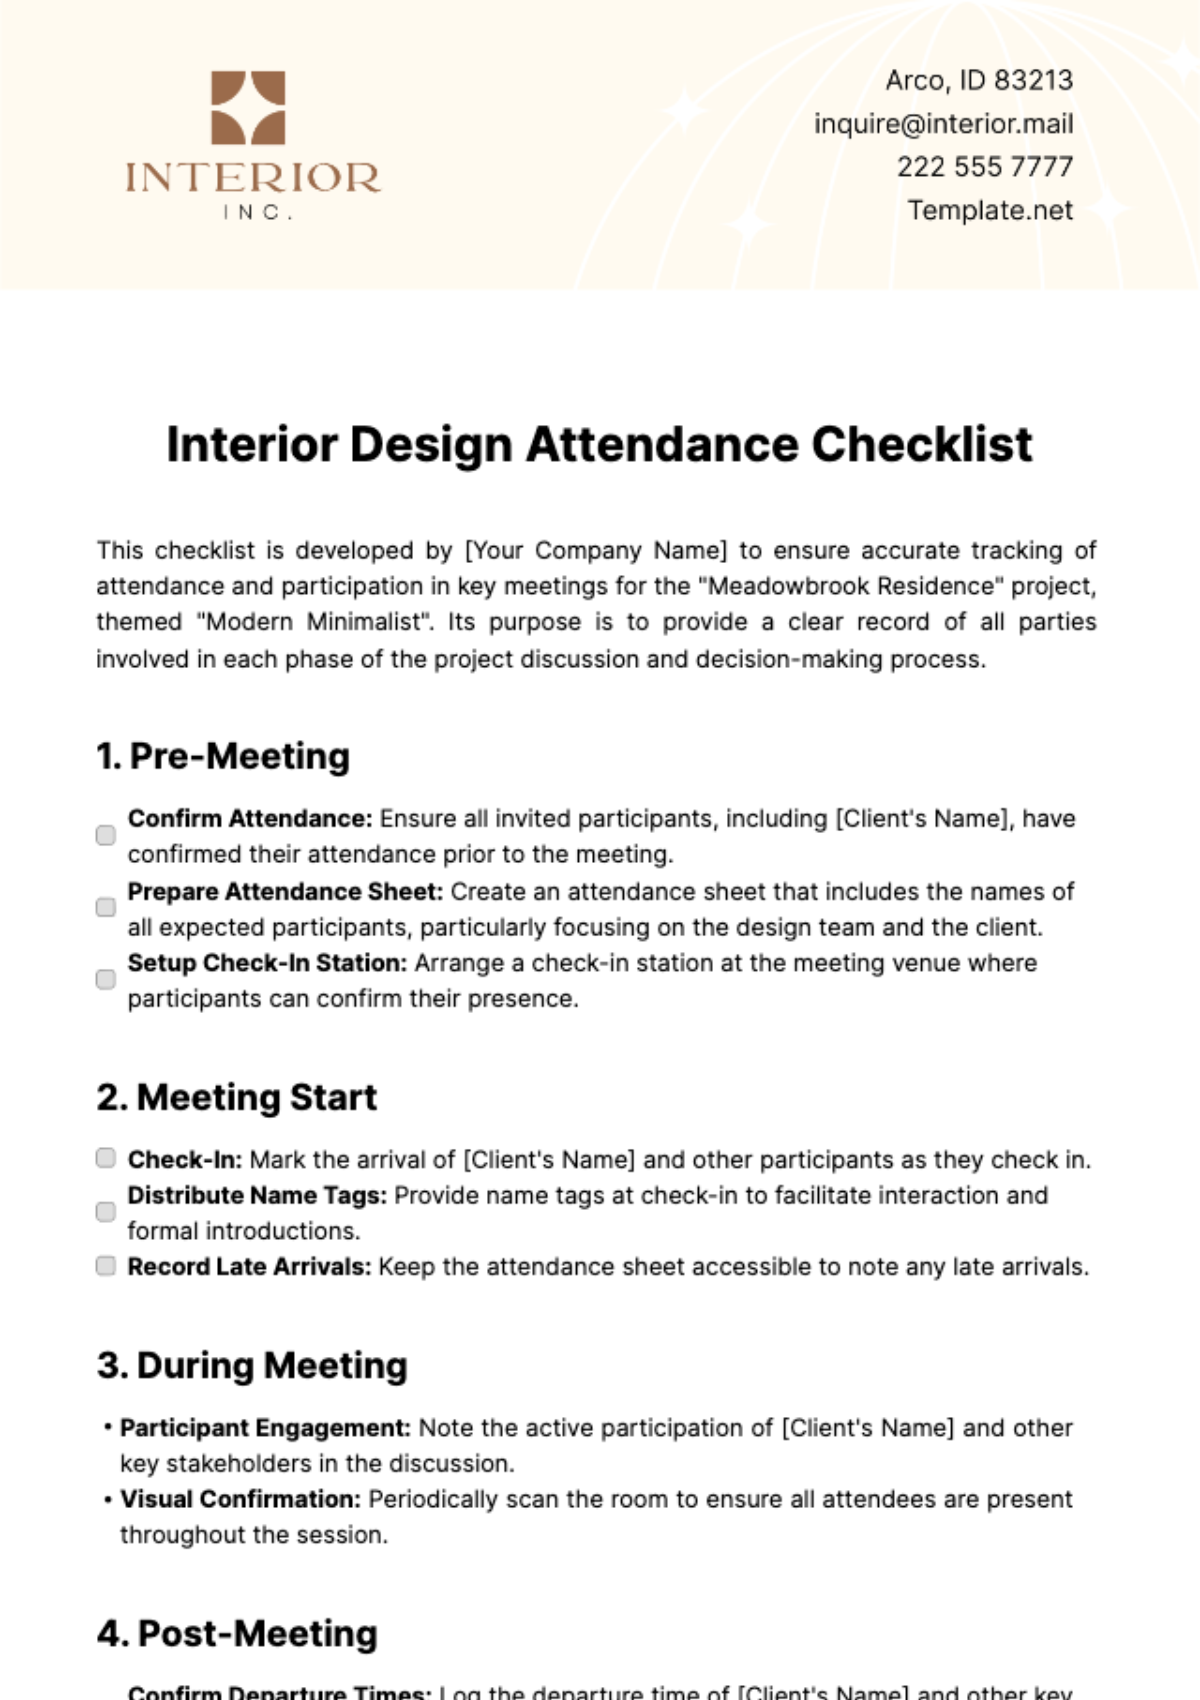 Free Interior Design Attendance Checklist Template